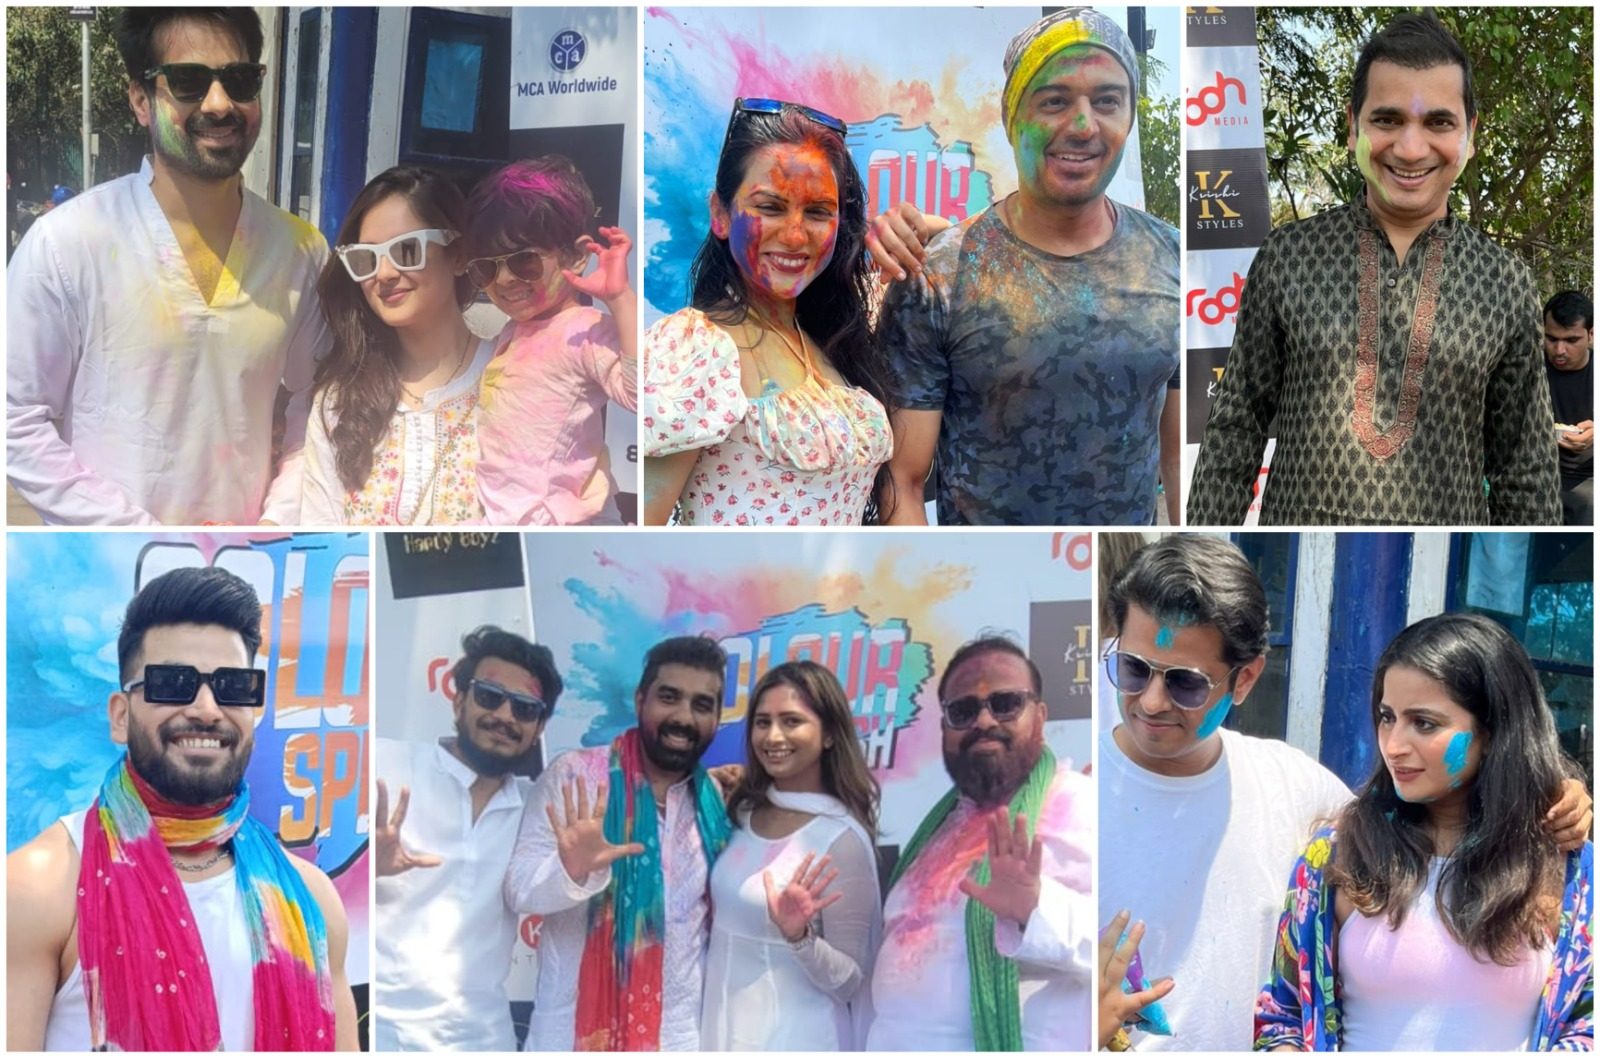 Biggest Holi fest was held at Inorbit Mall amongst celebrities!